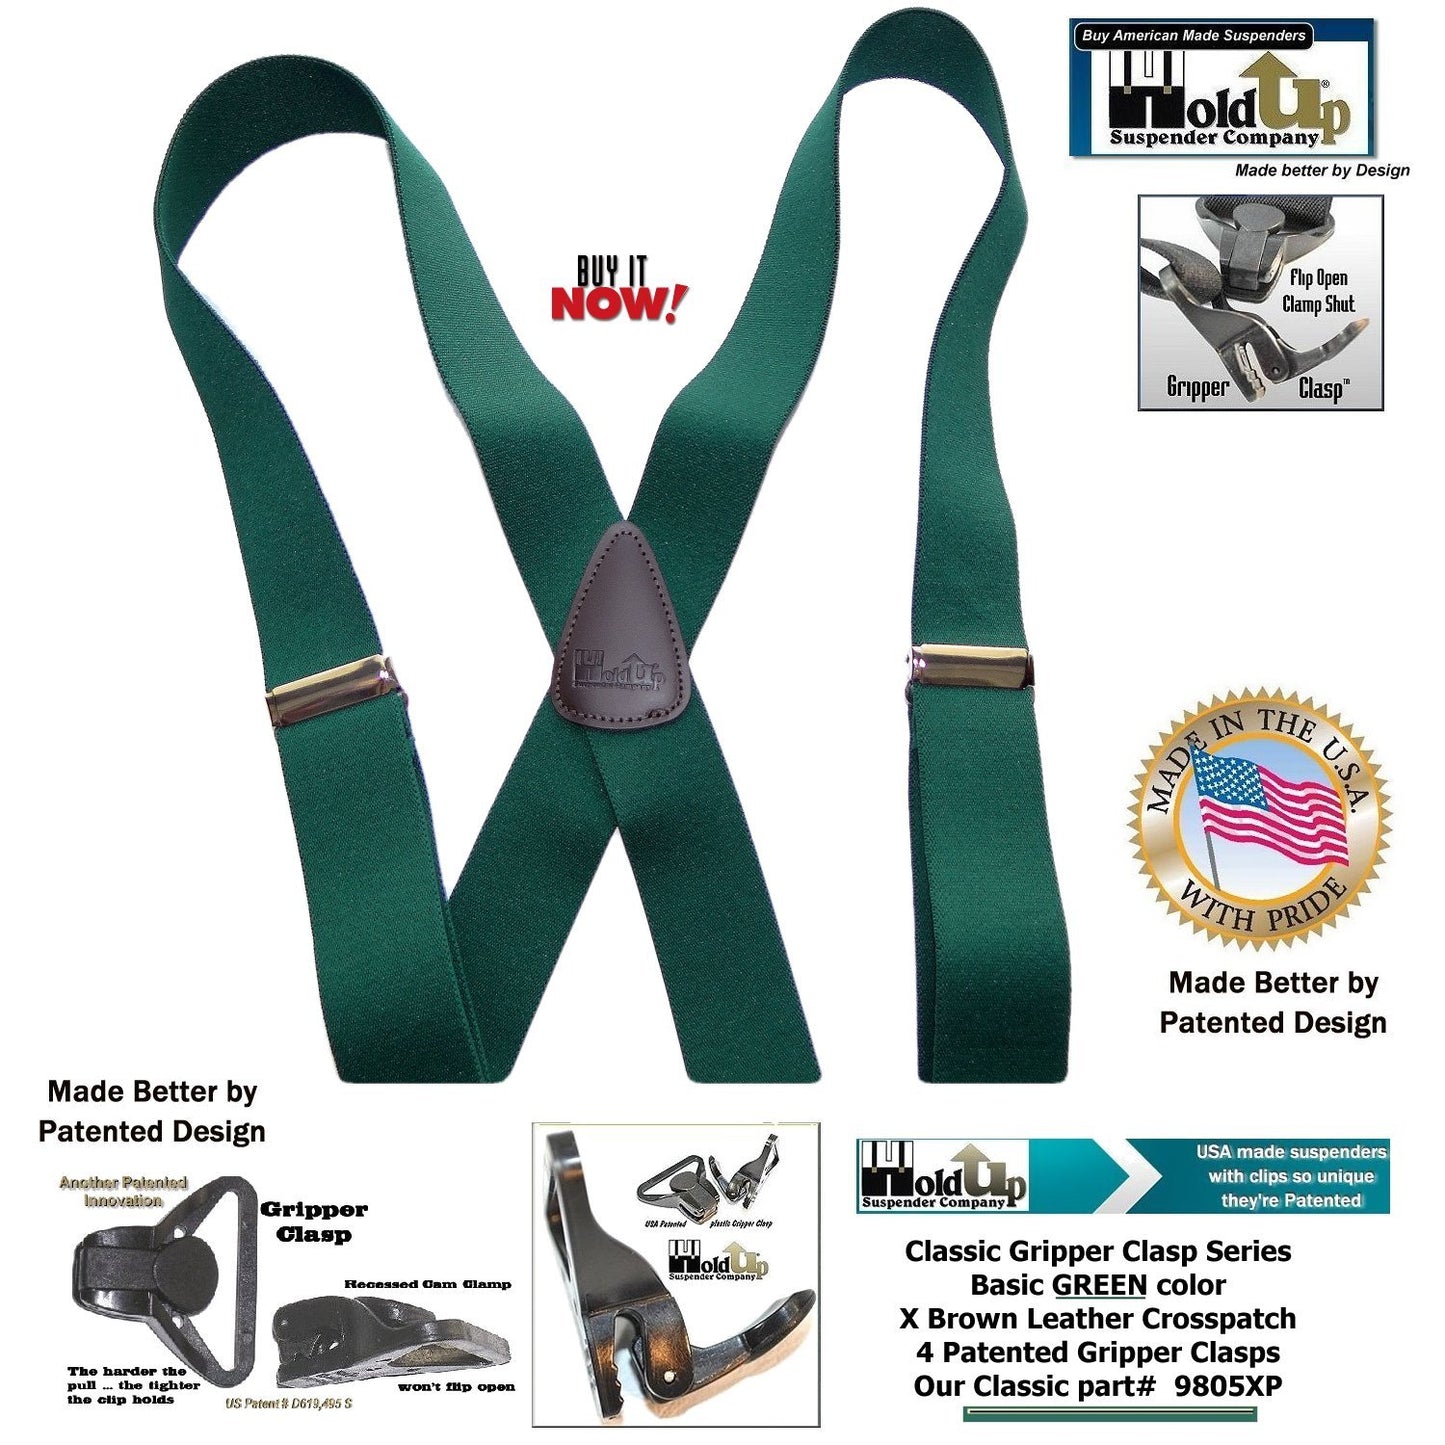 HoldUp Brand Dark Green Xback Classic Series Holdup Gripper Clasps Suspenders